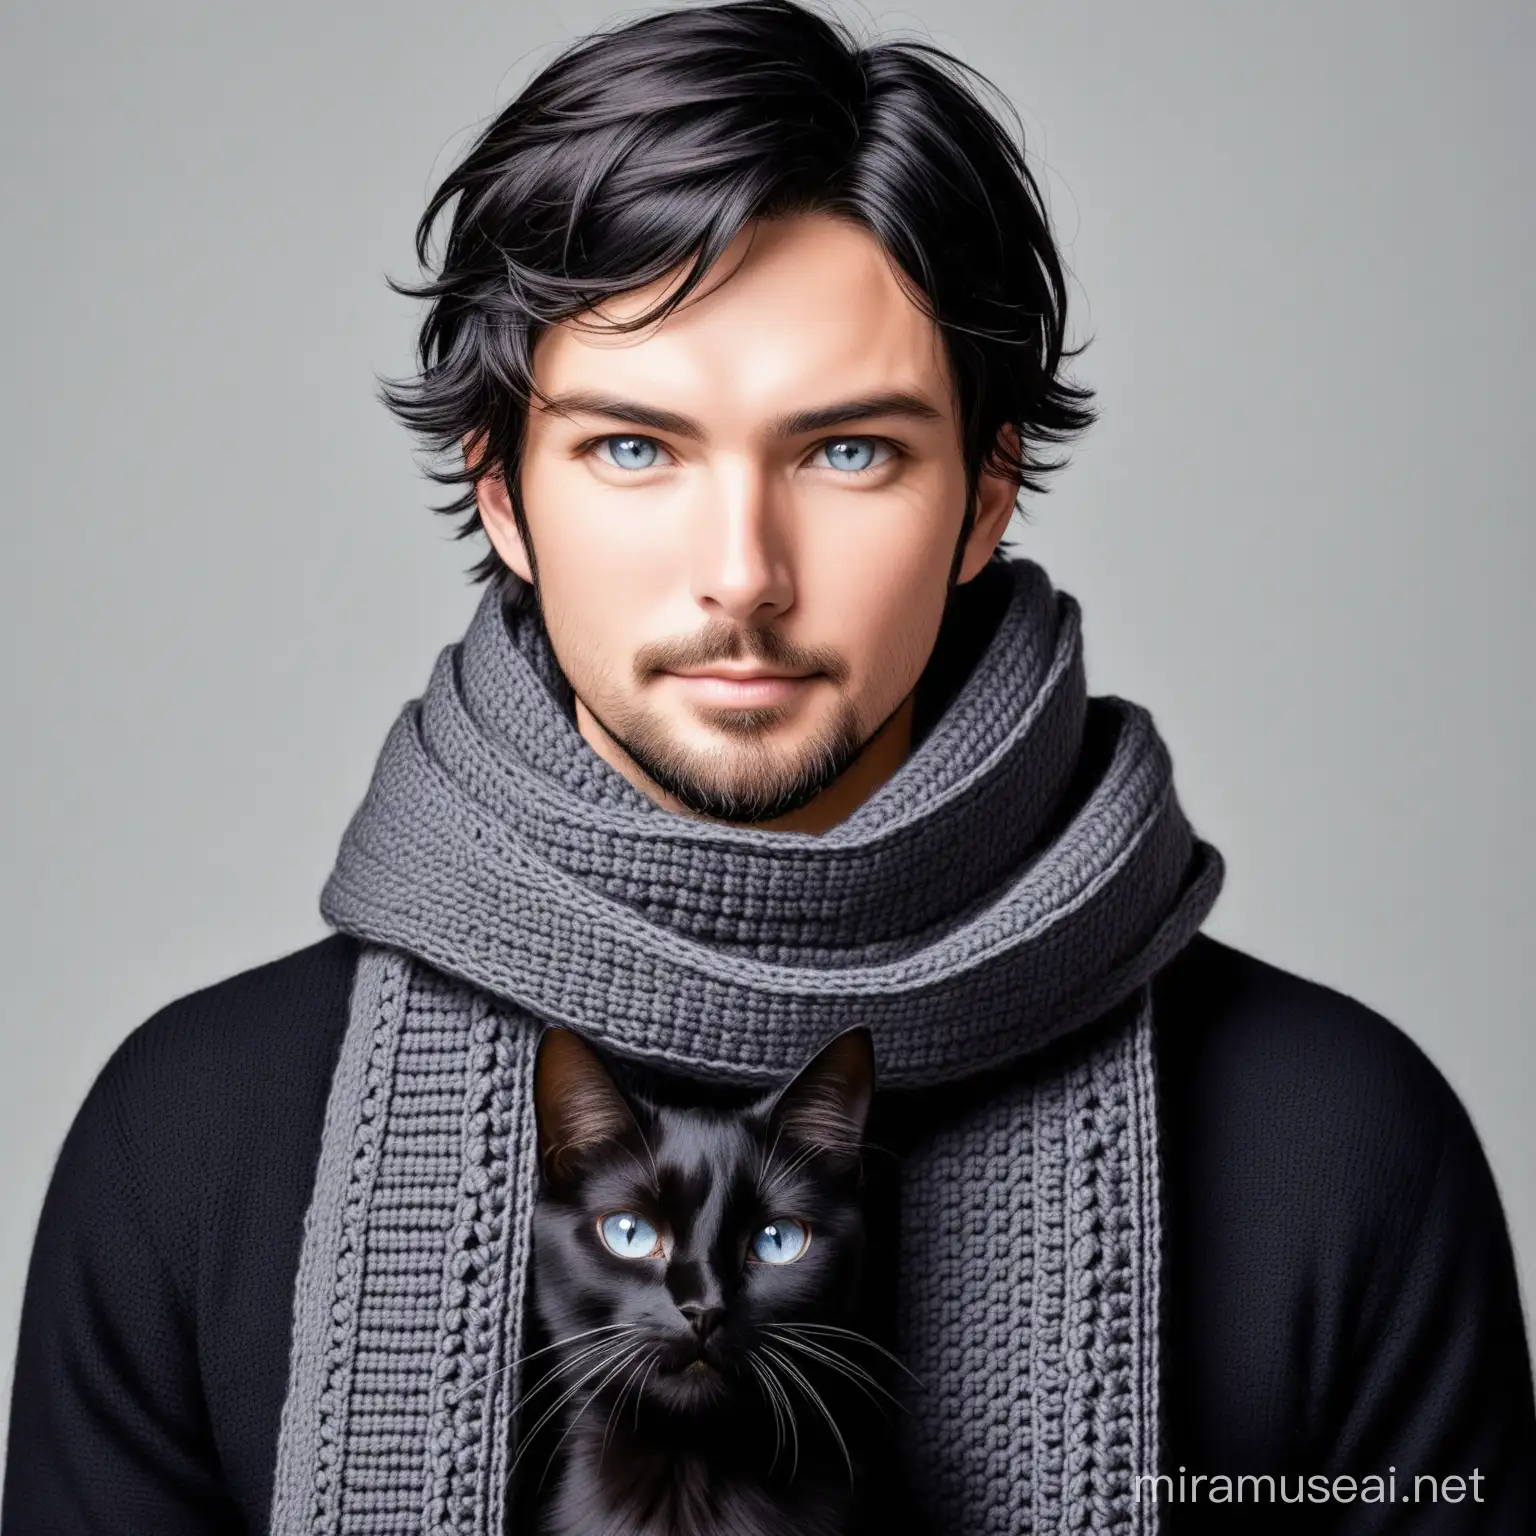 Caucasian Gentleman in Winter Attire with Feline Companion